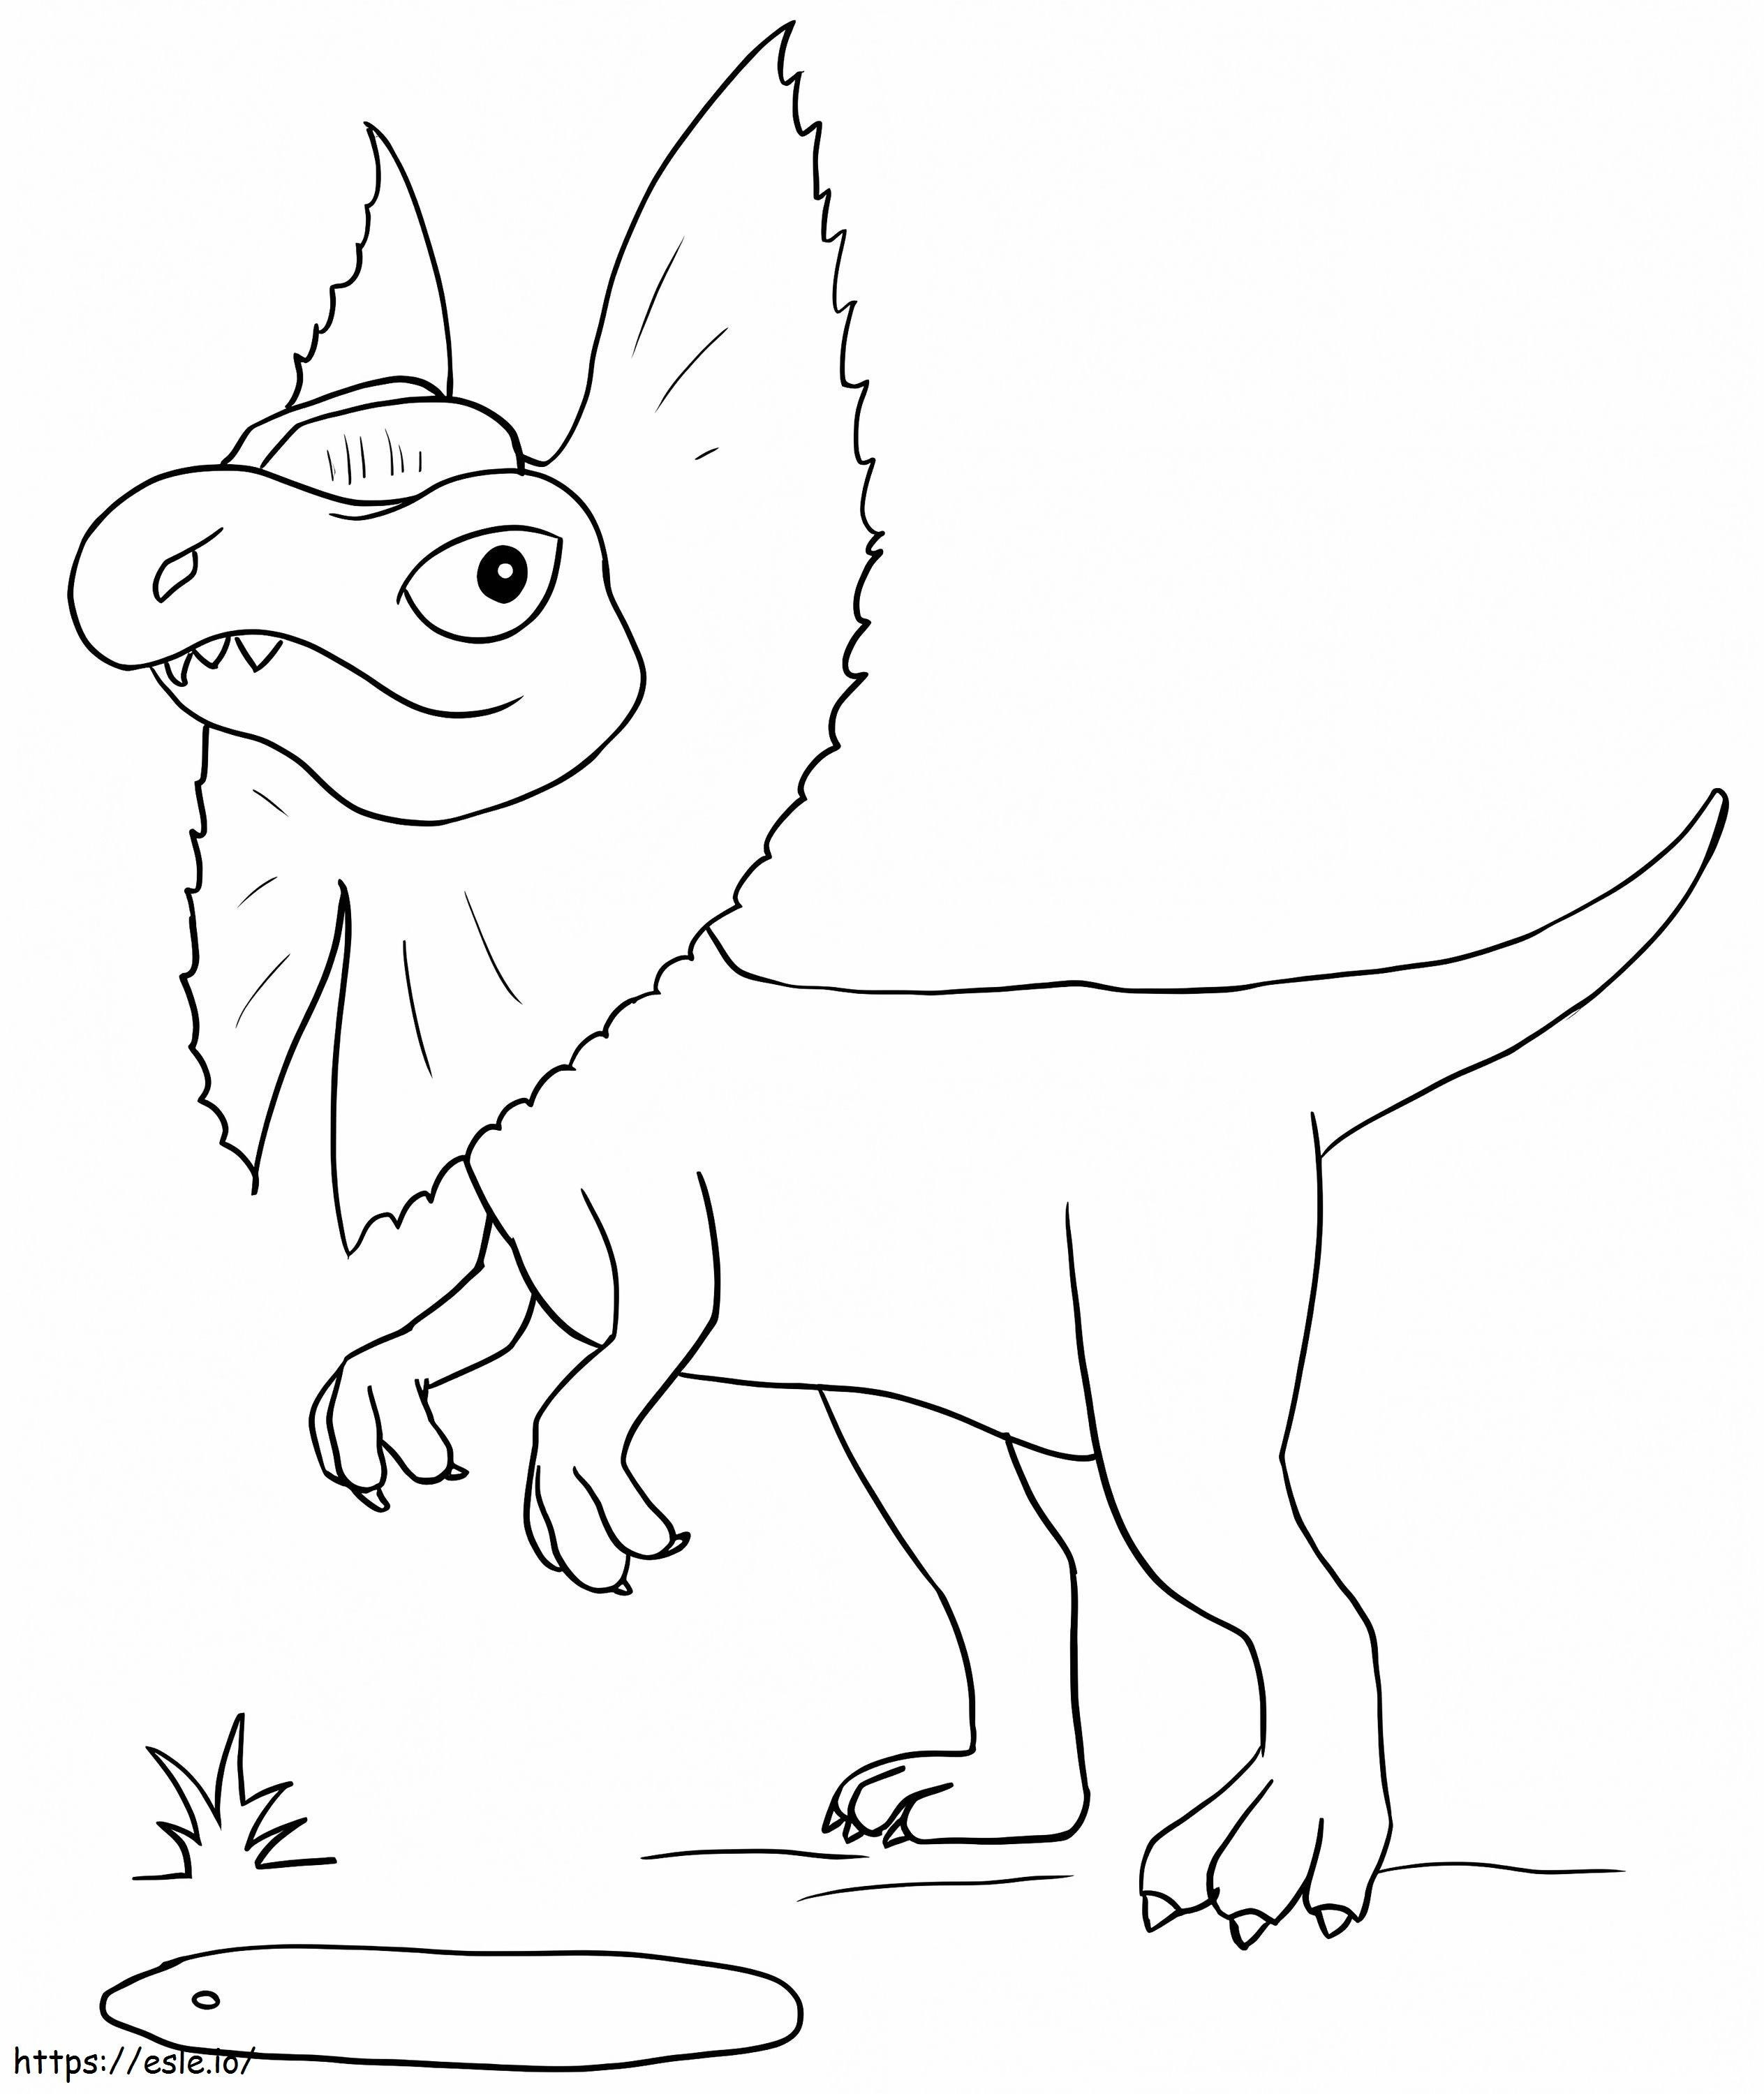 Cute Dilophosaurus coloring page